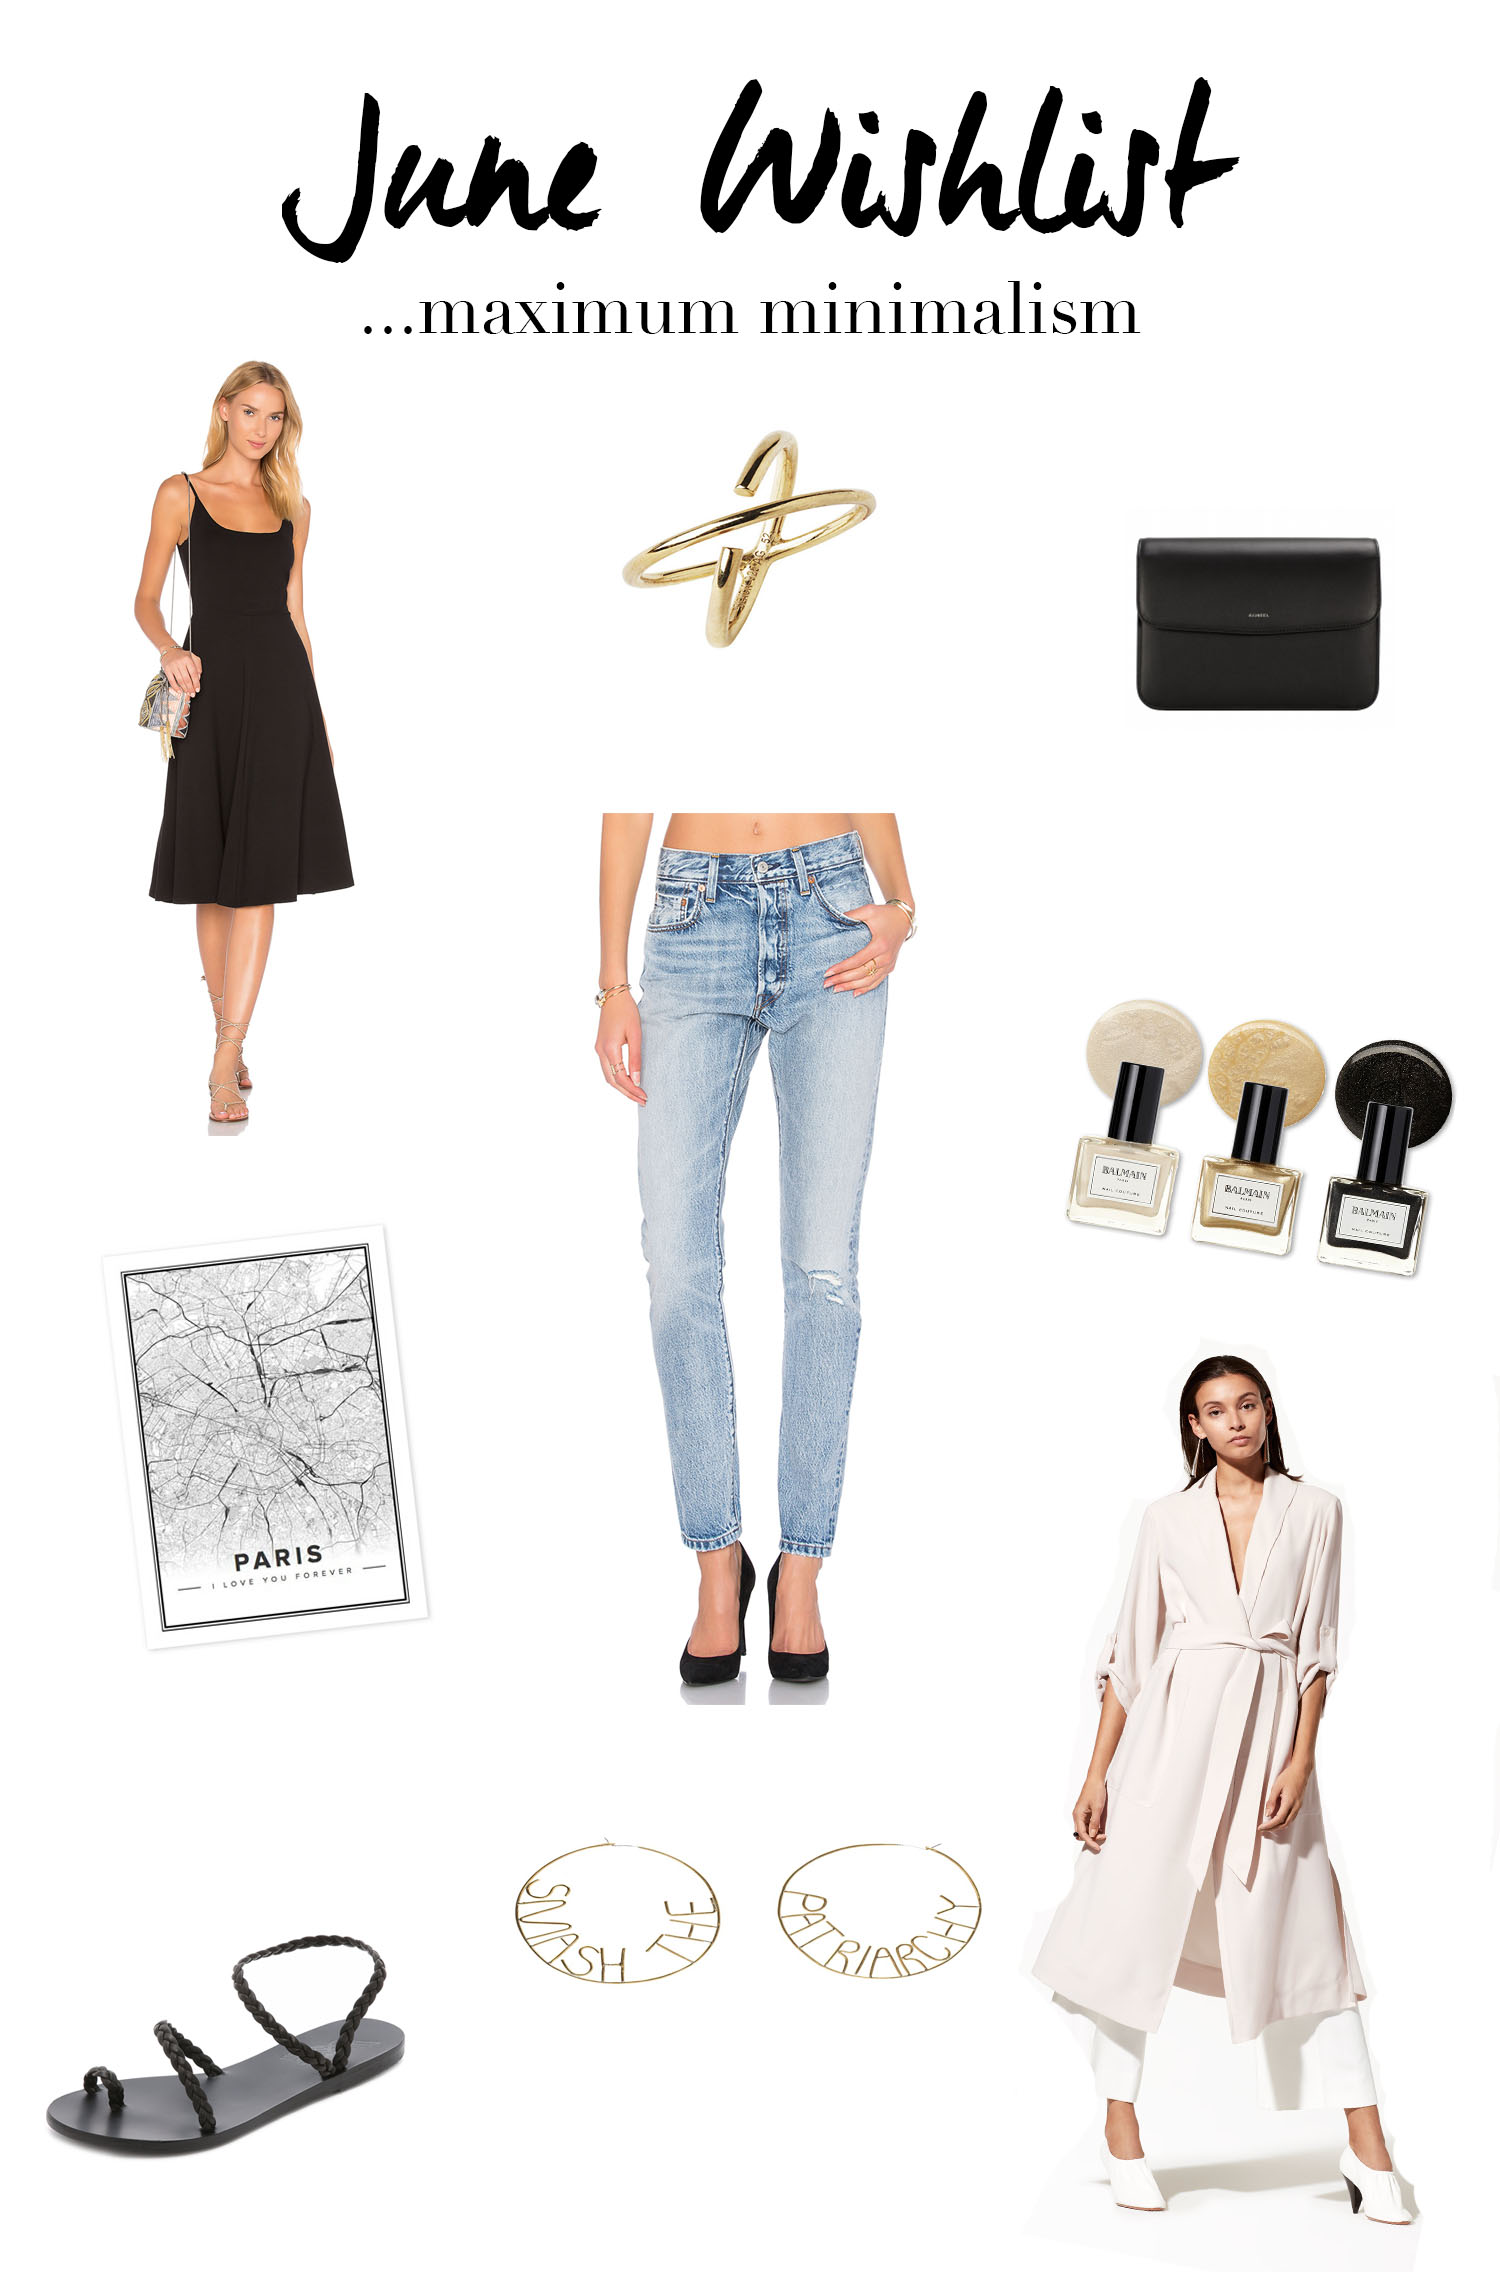 June 2017 shopping wishlist compiled by Winnipeg style blogger Cee Fardoe of Coco & Vera